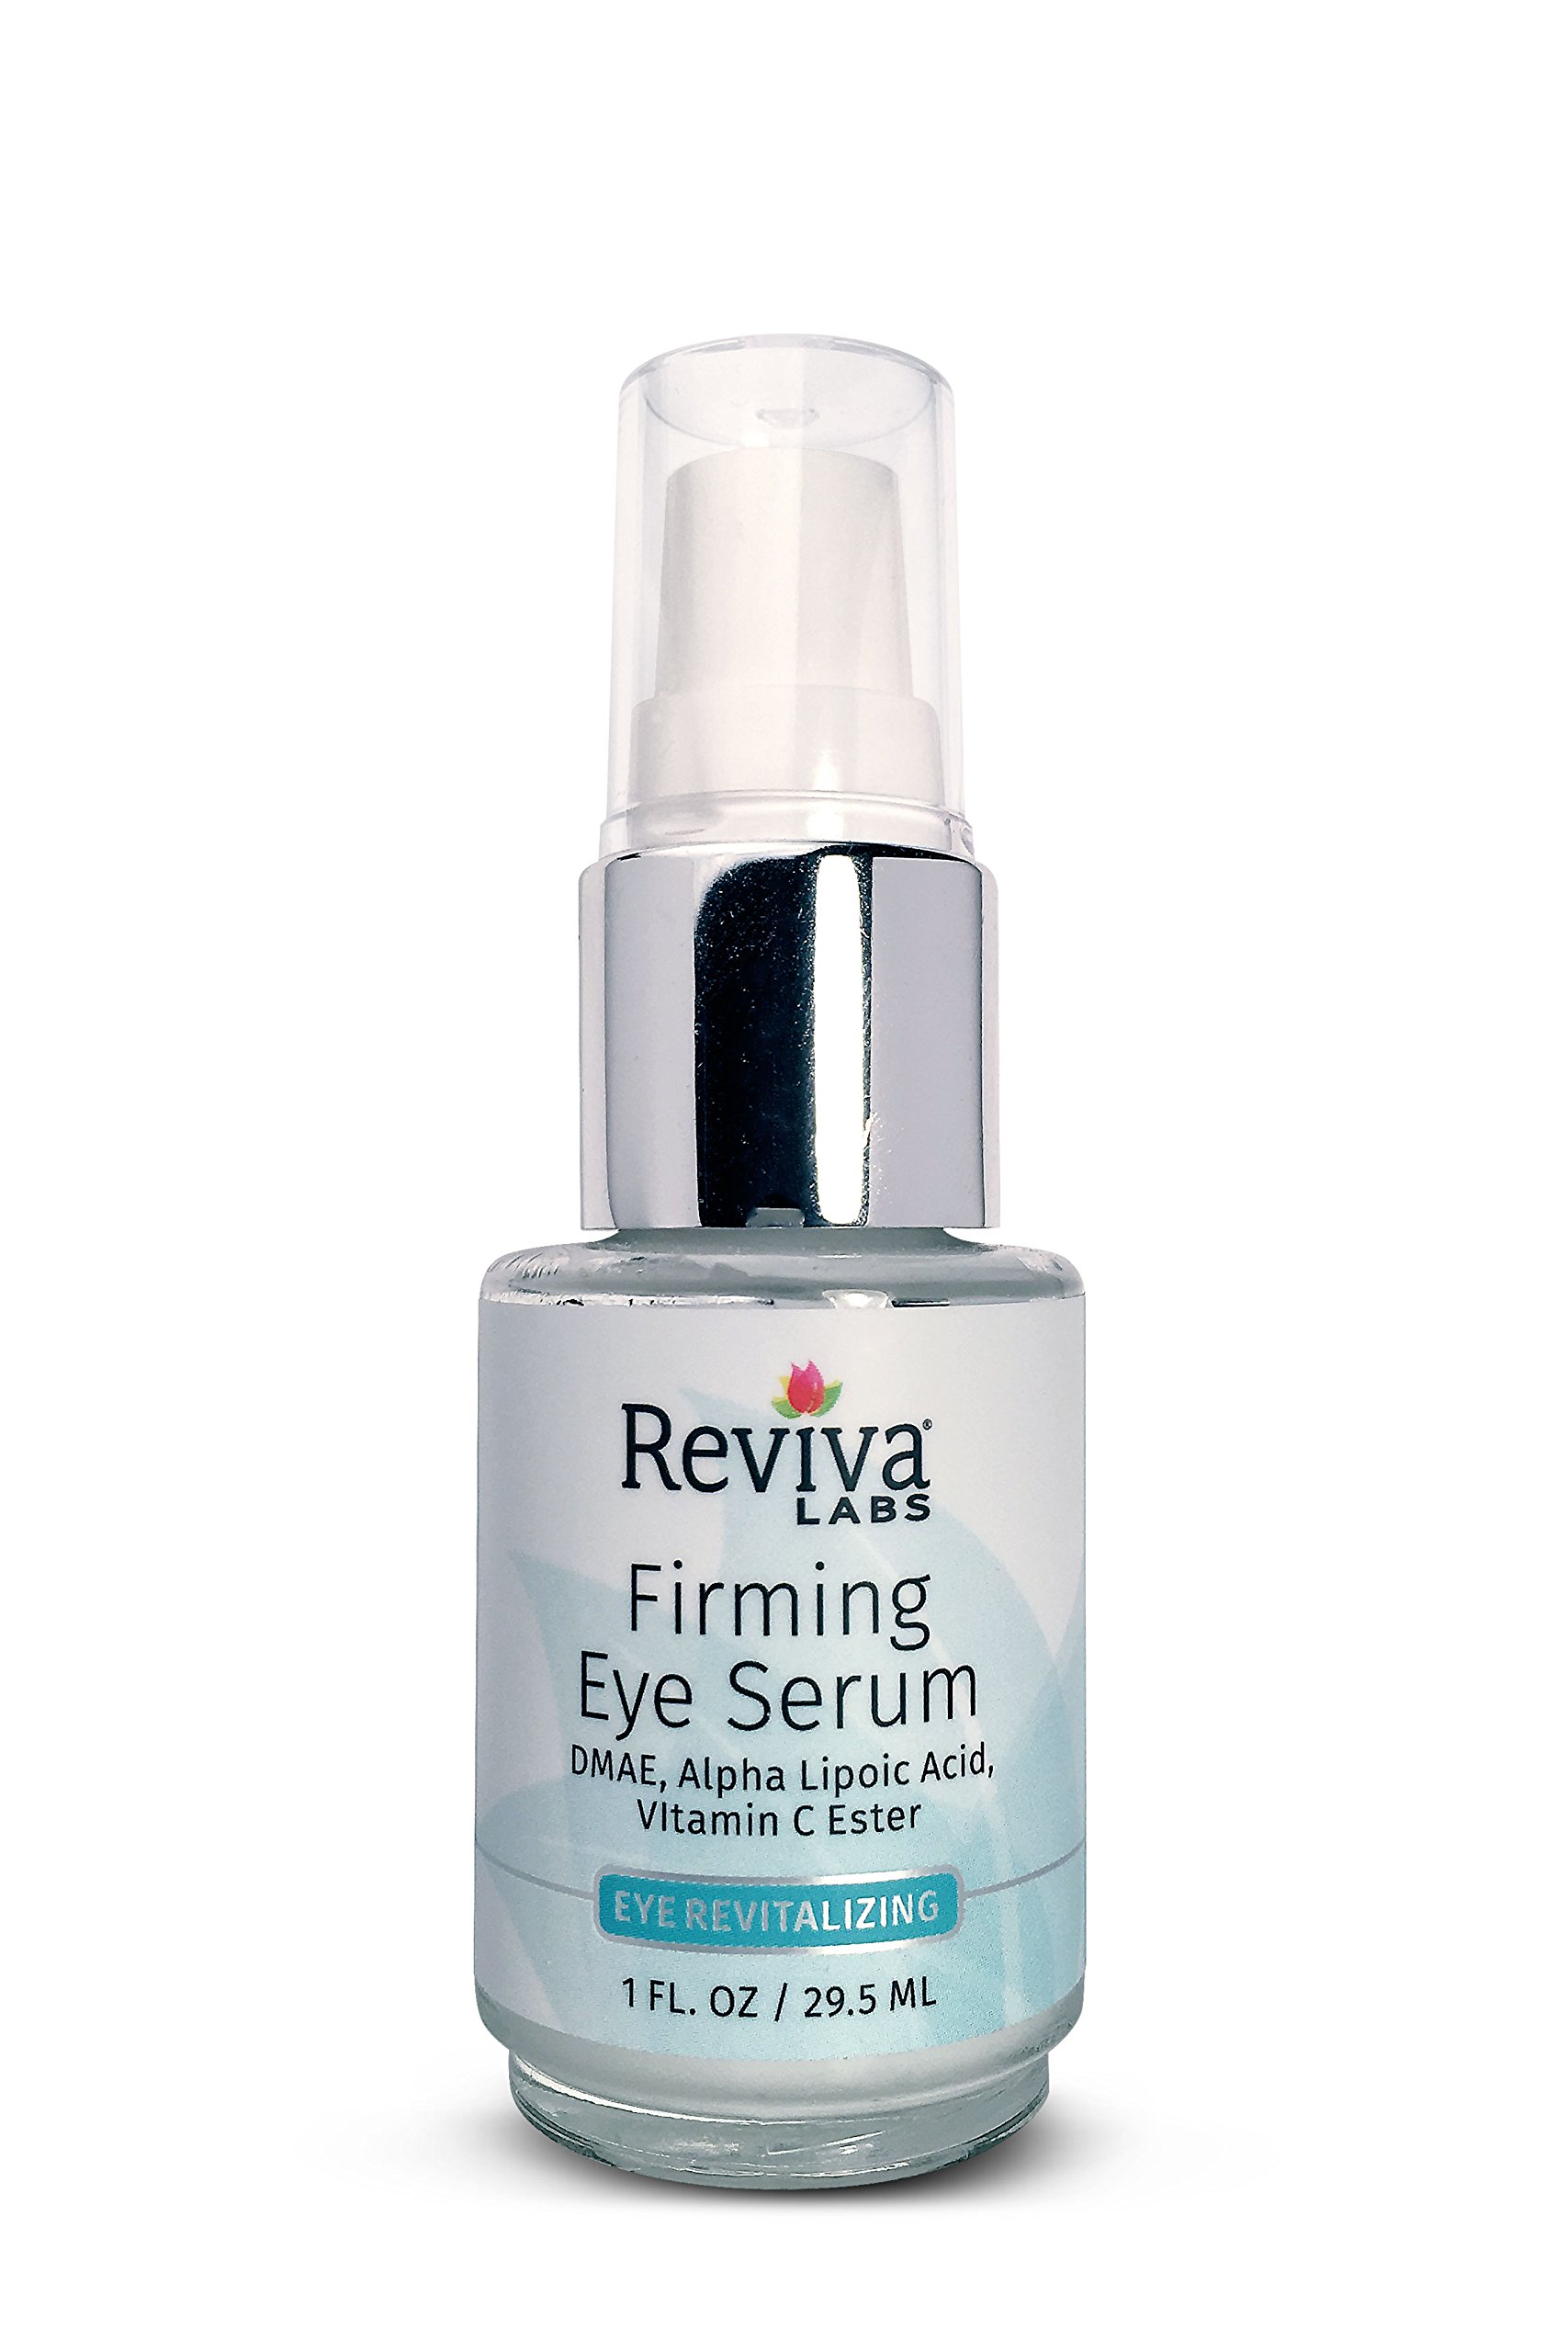 Reviva Labs Firming Eye Serum with DMAE, Alpha Lipoic Acid & Vitamin C Ester